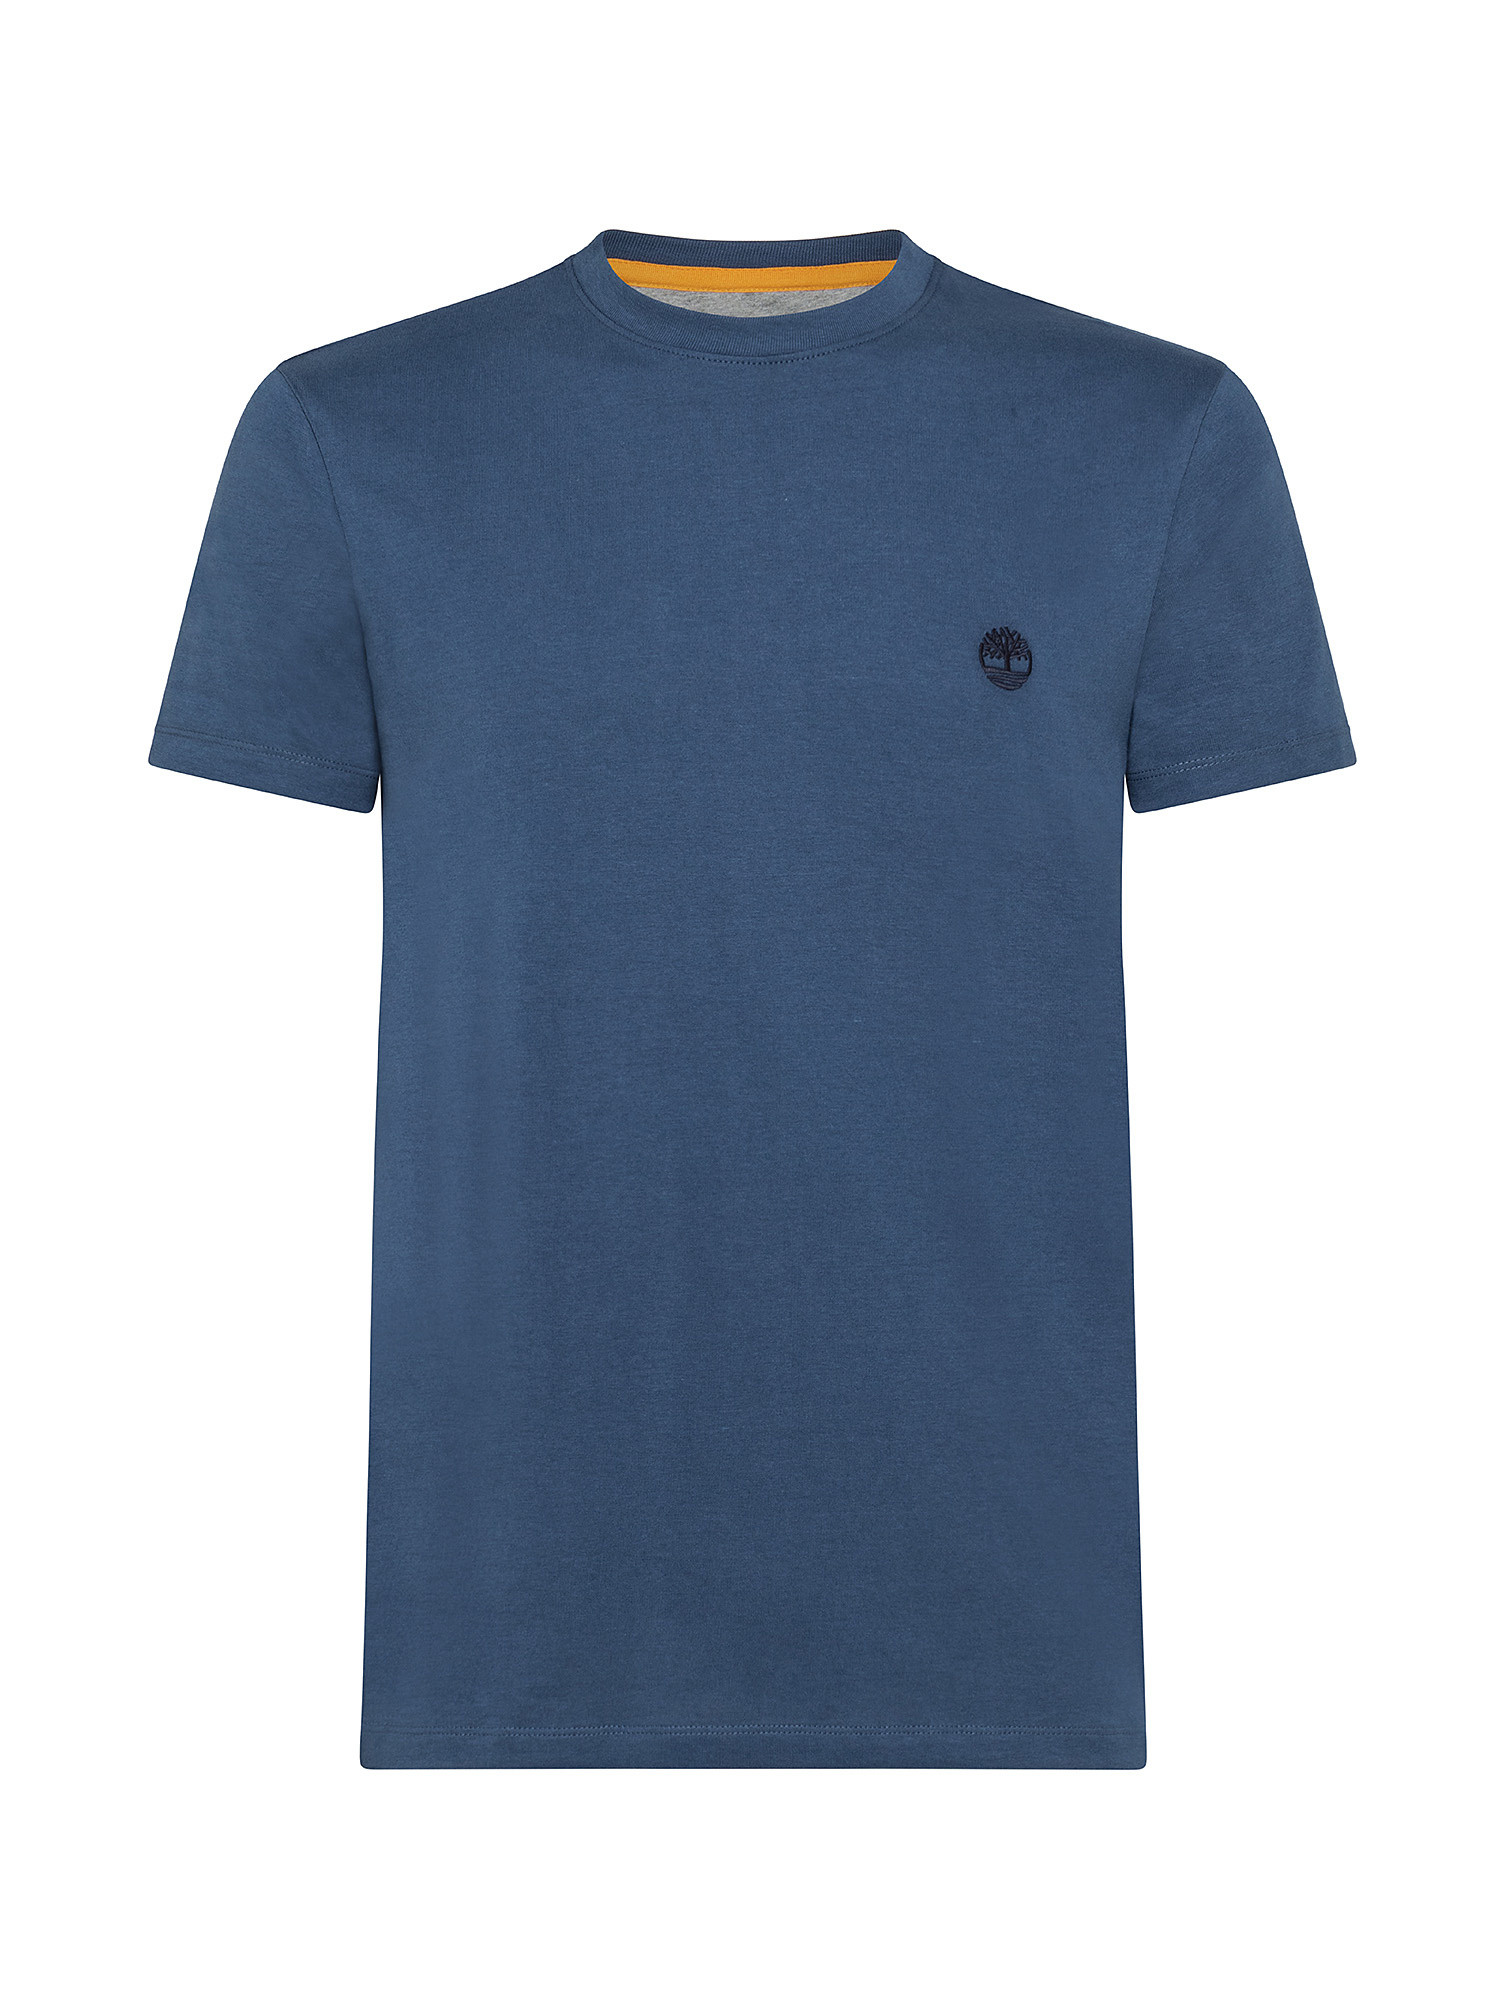 T-shirt da Uomo Dunstan River, Blu, large image number 0